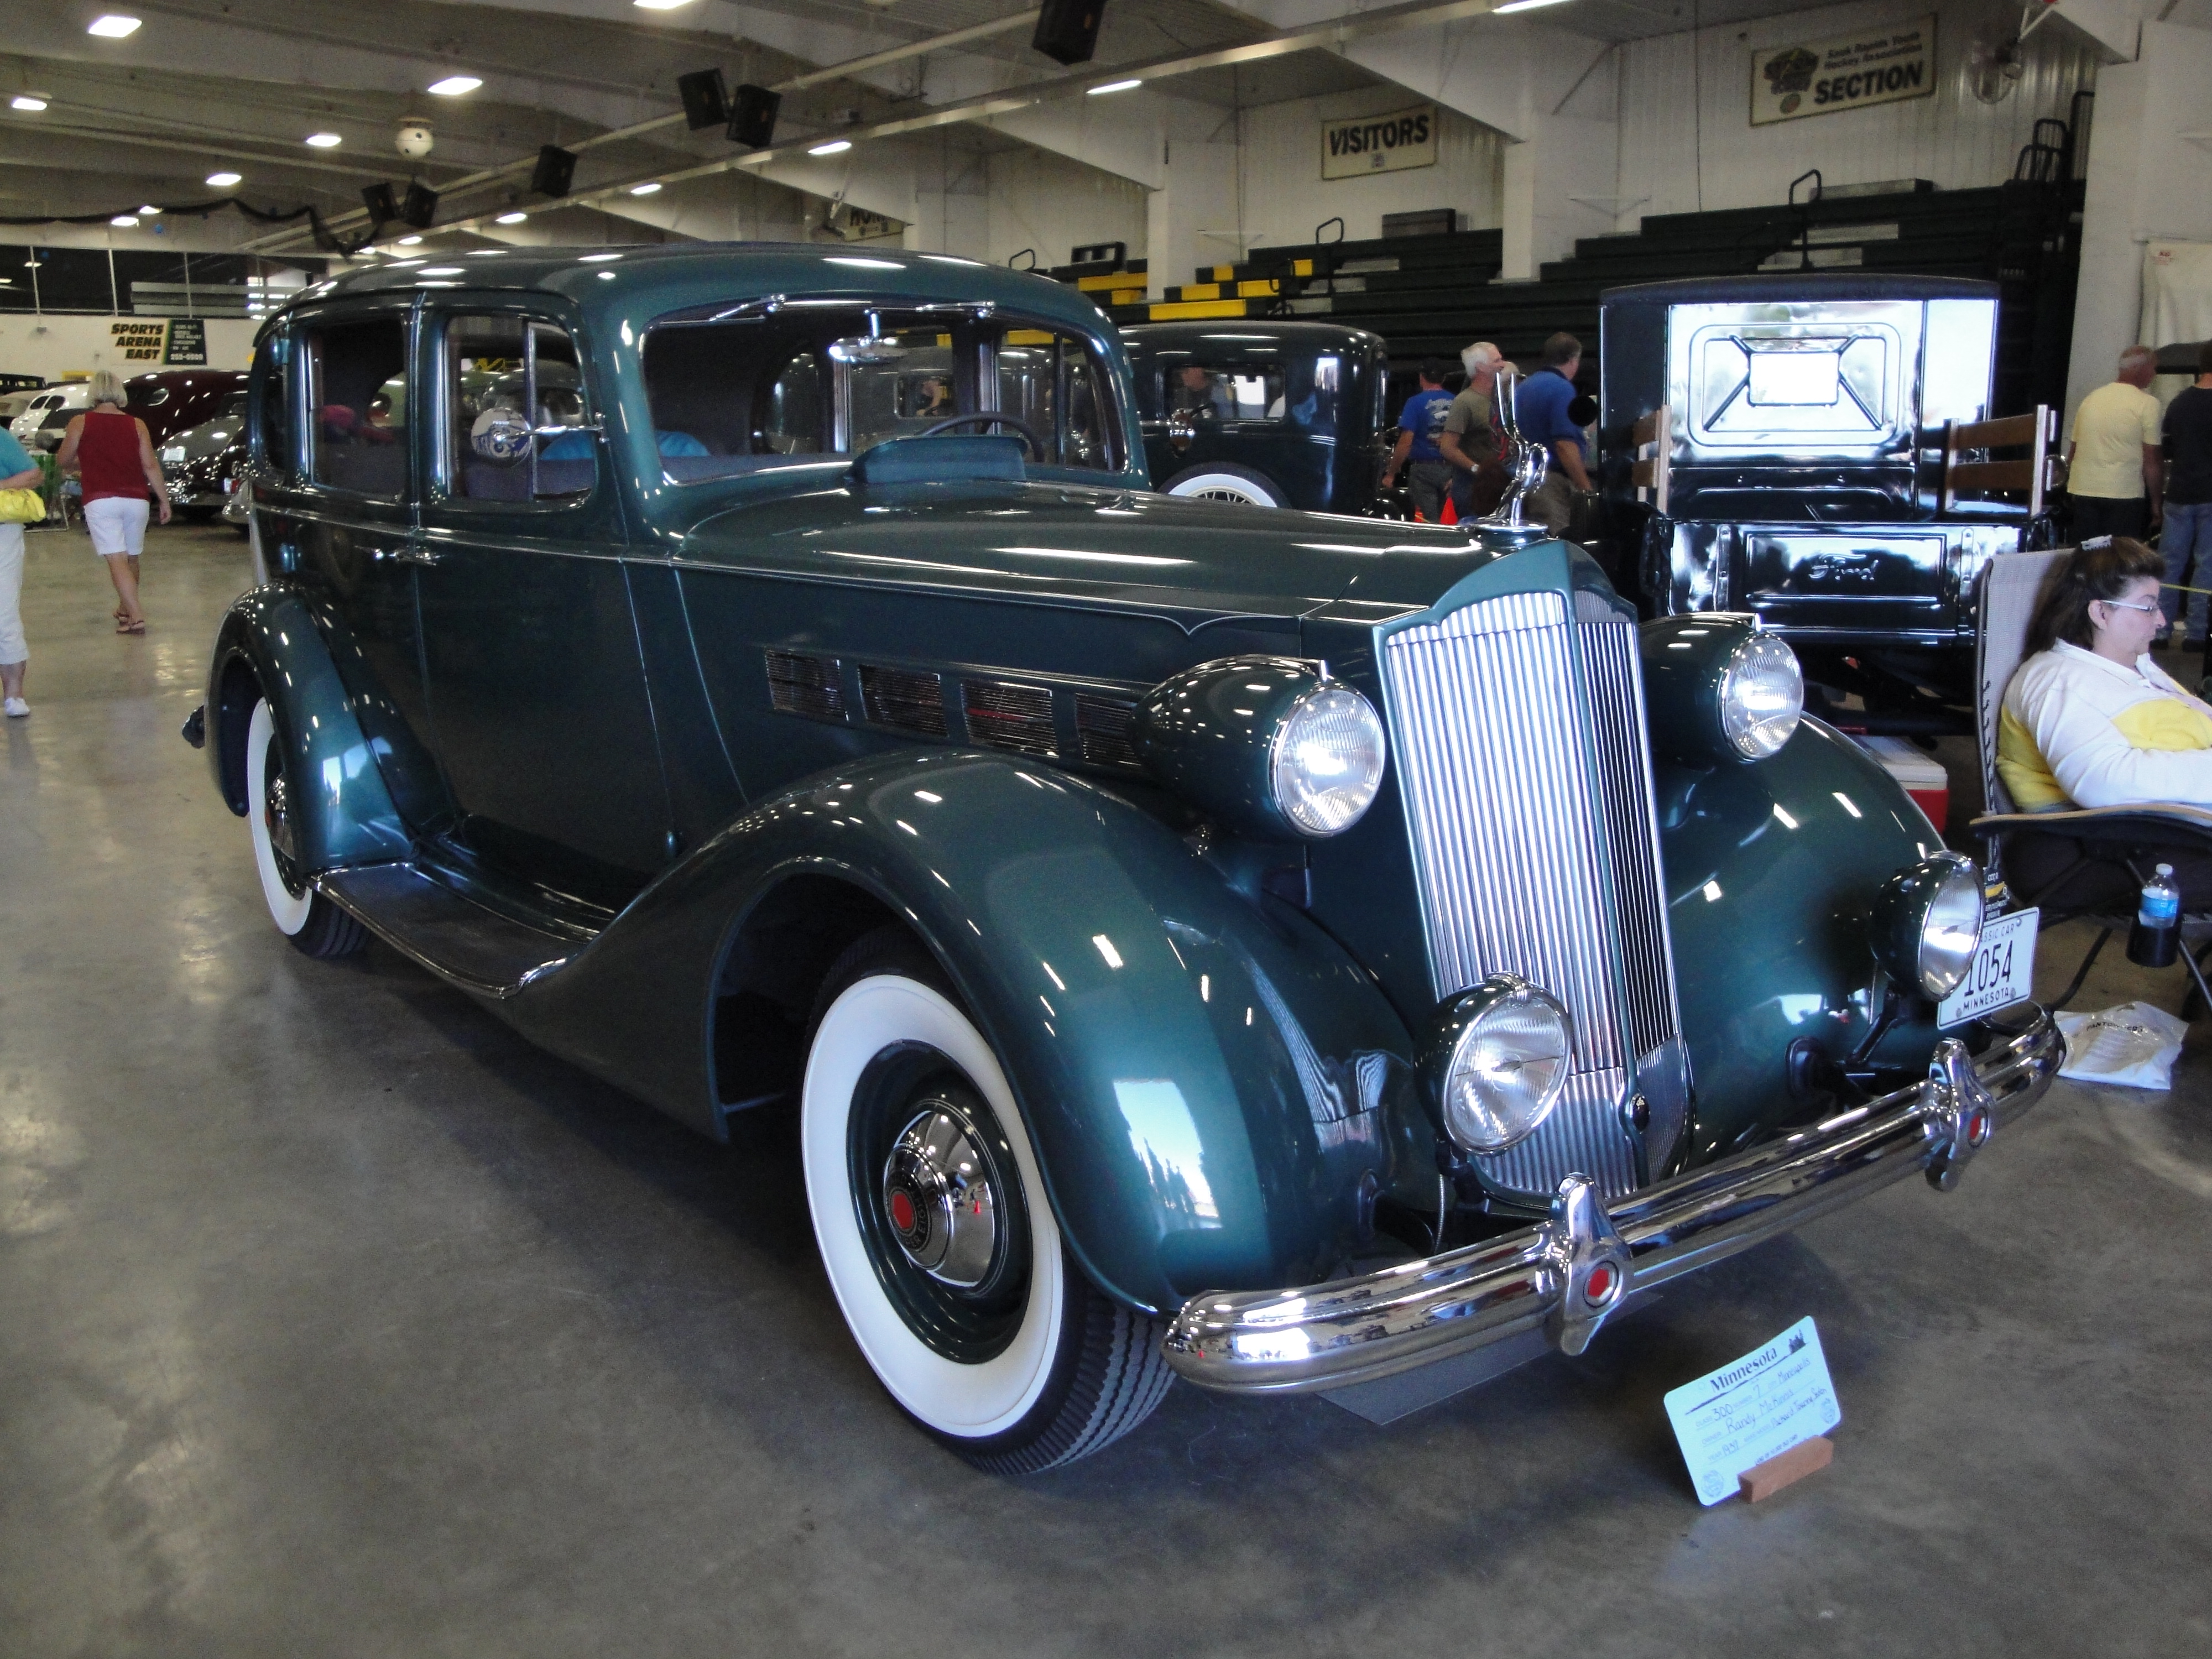 File:Flickr - DVS1mn - 37 Packard Touring Sedan.jpg - Wikimedia ...